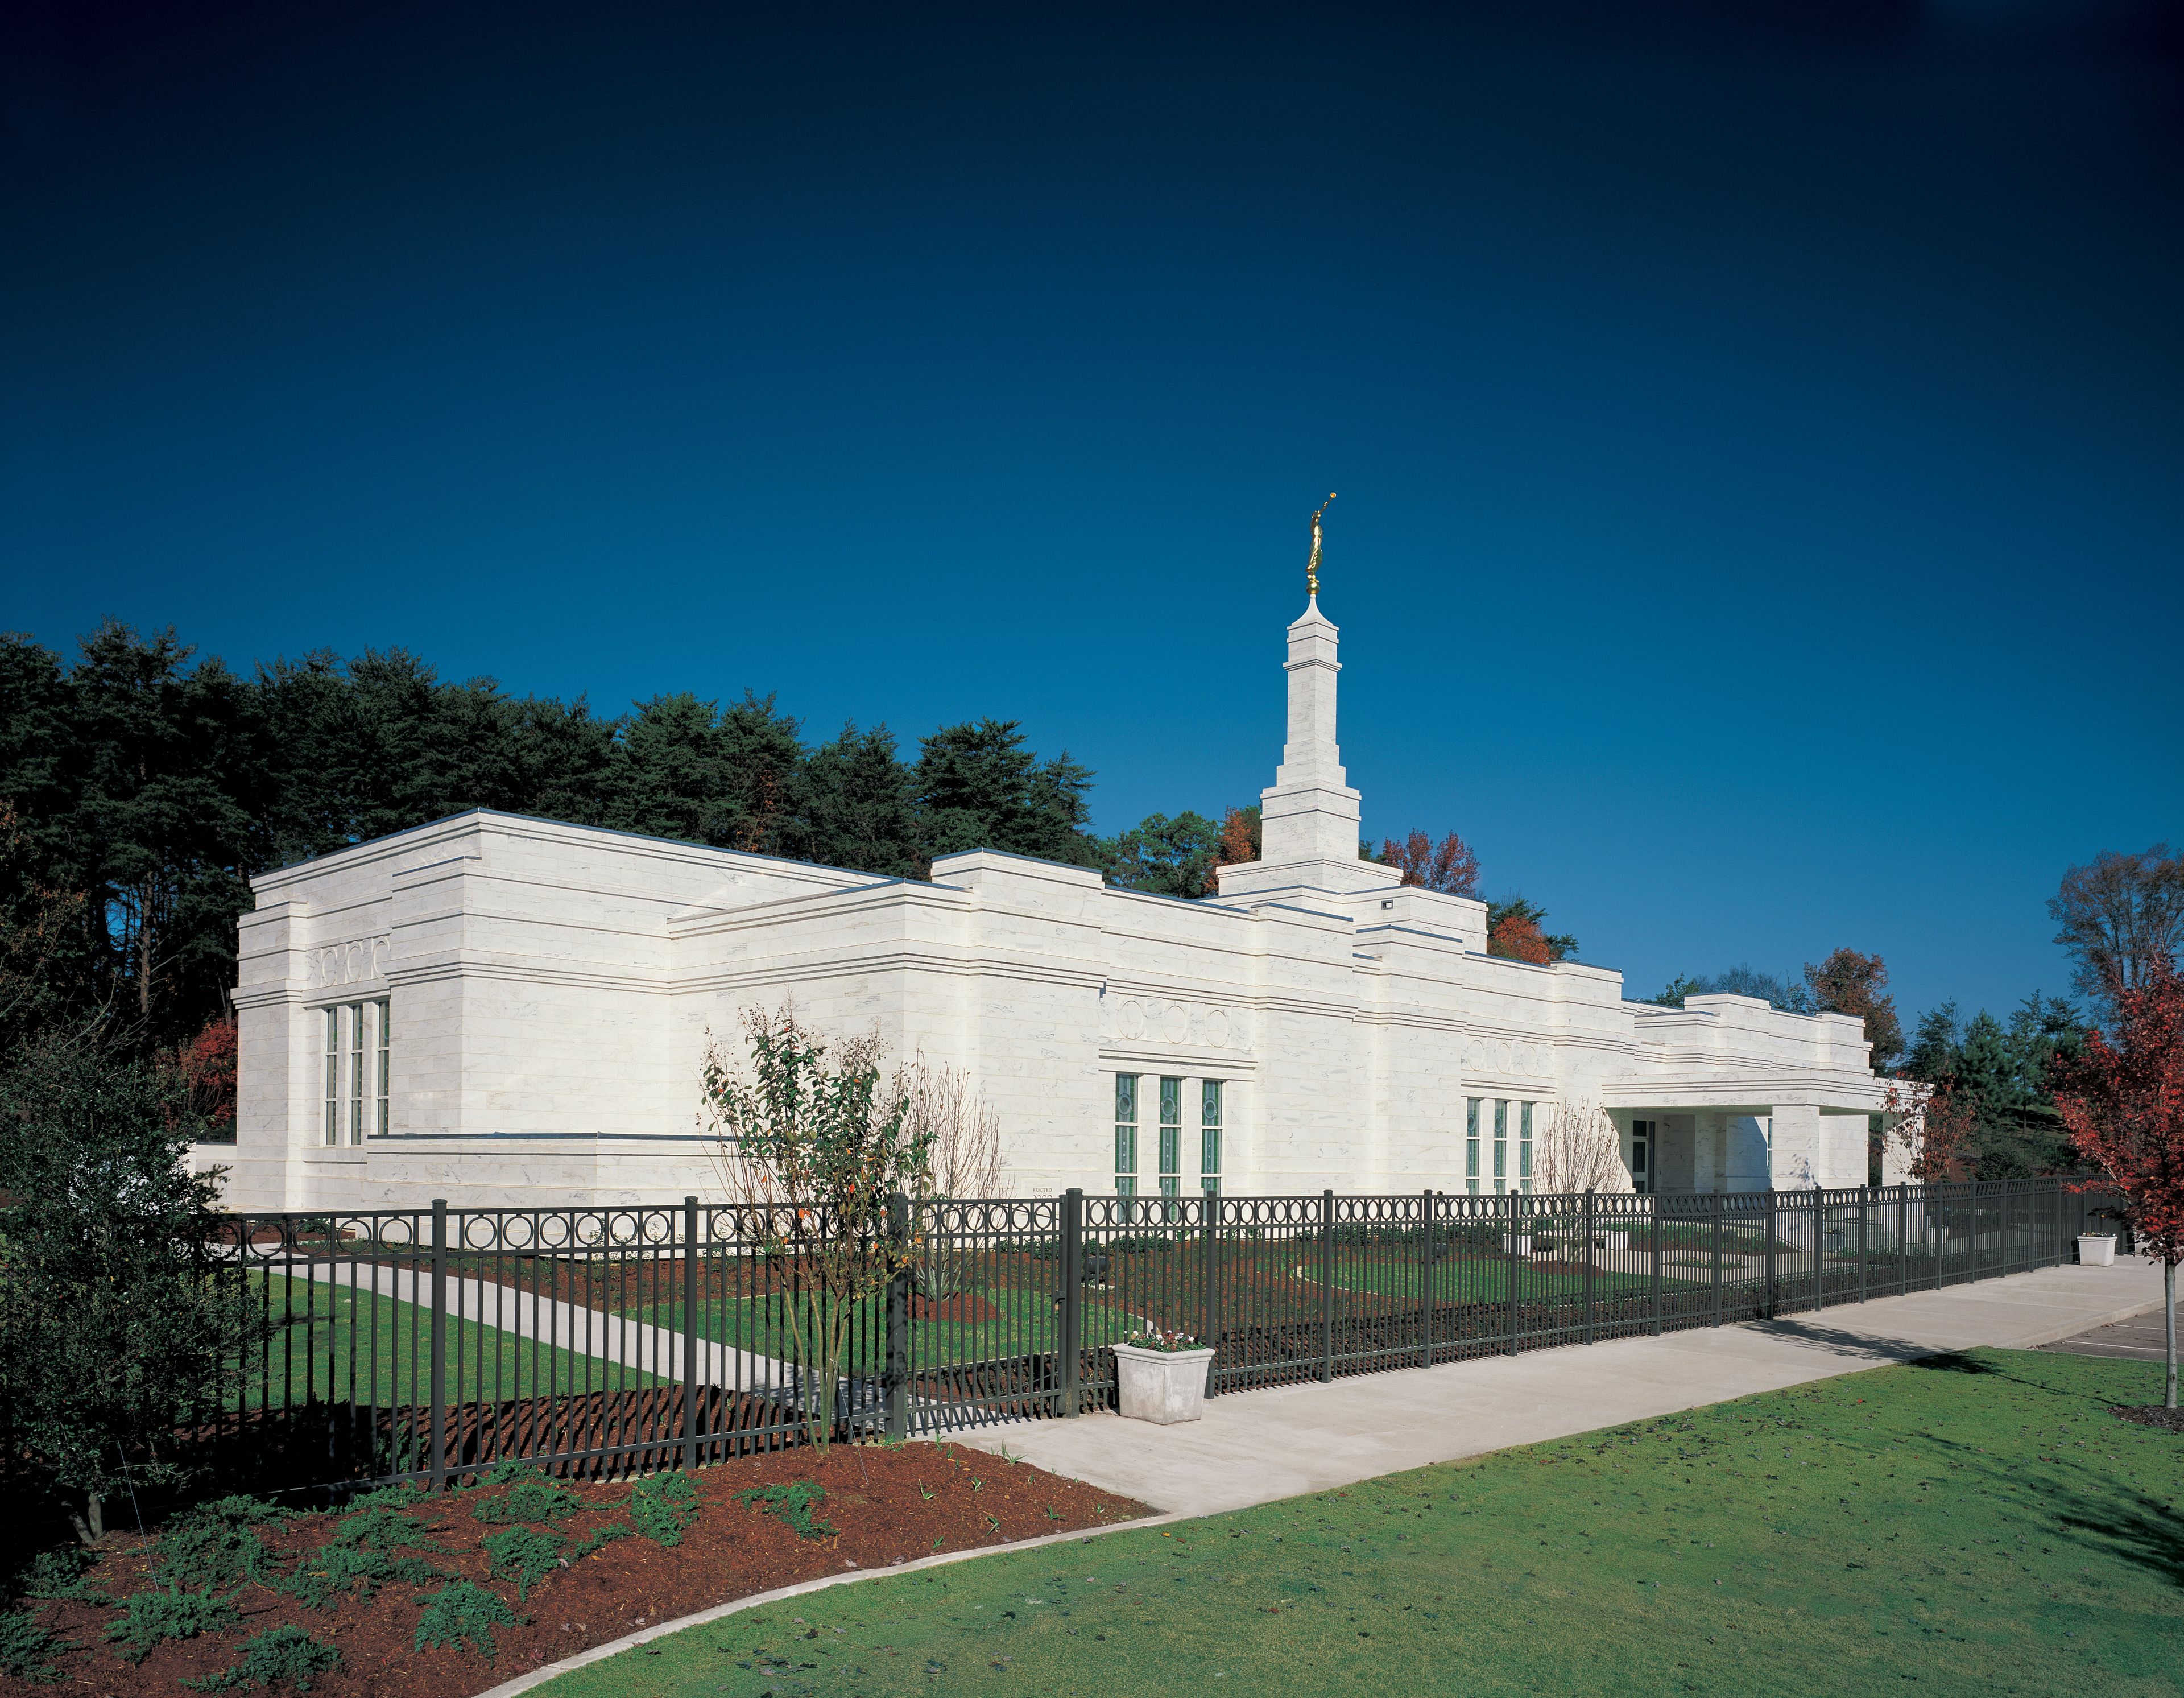 The Birmingham Alabama Temple and surrounding landscape.